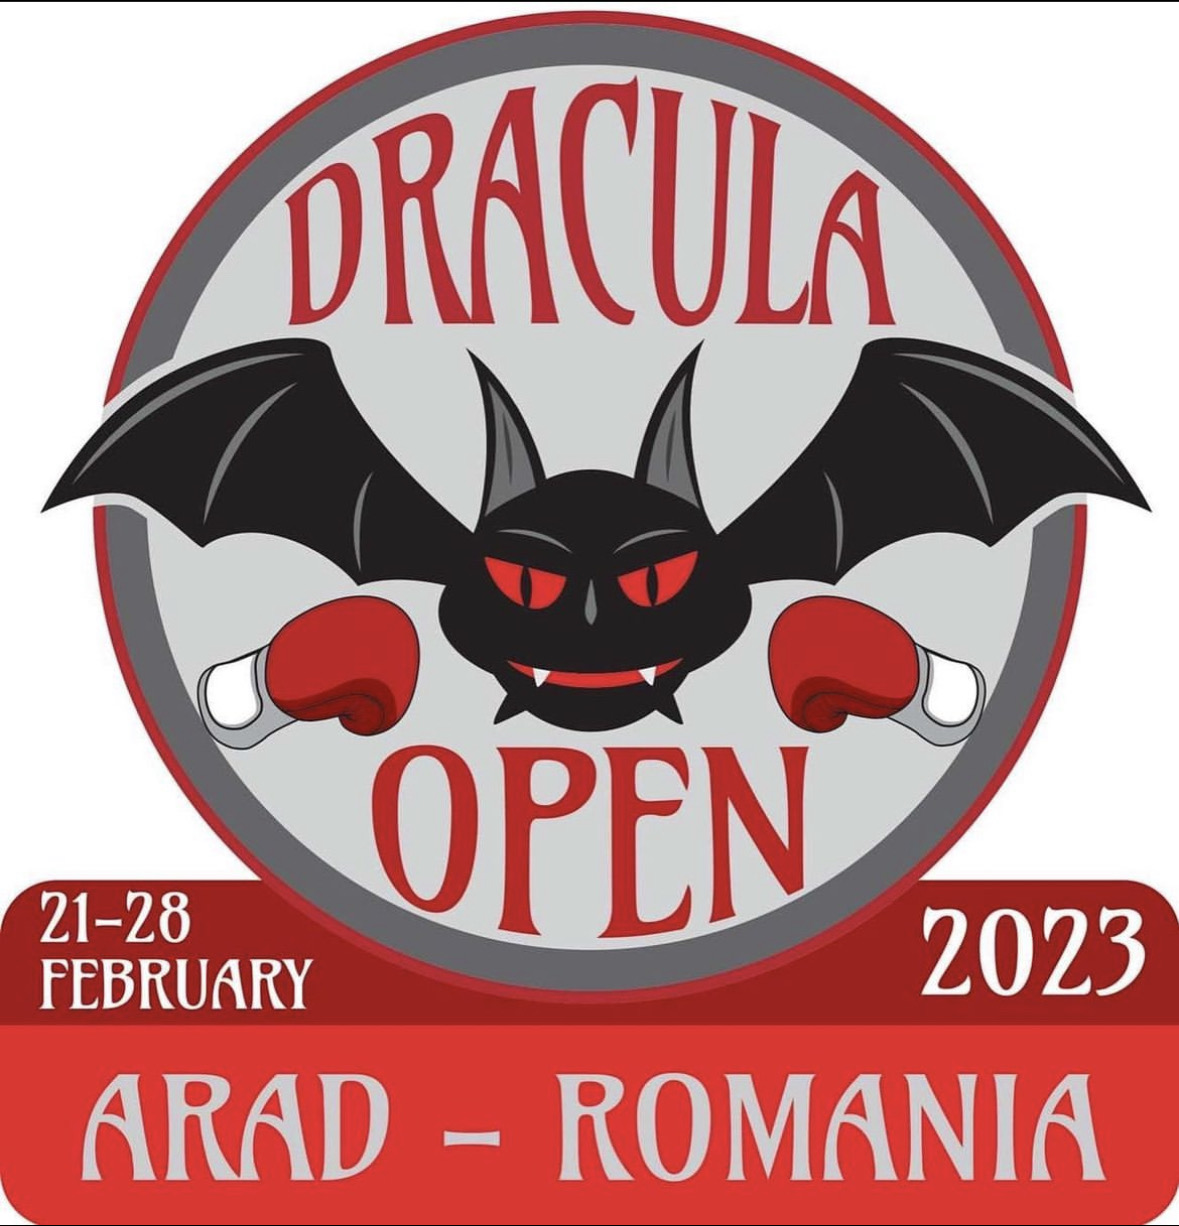 8 Azzurrini Youth per il Torneo Int. "Dracula Open" 